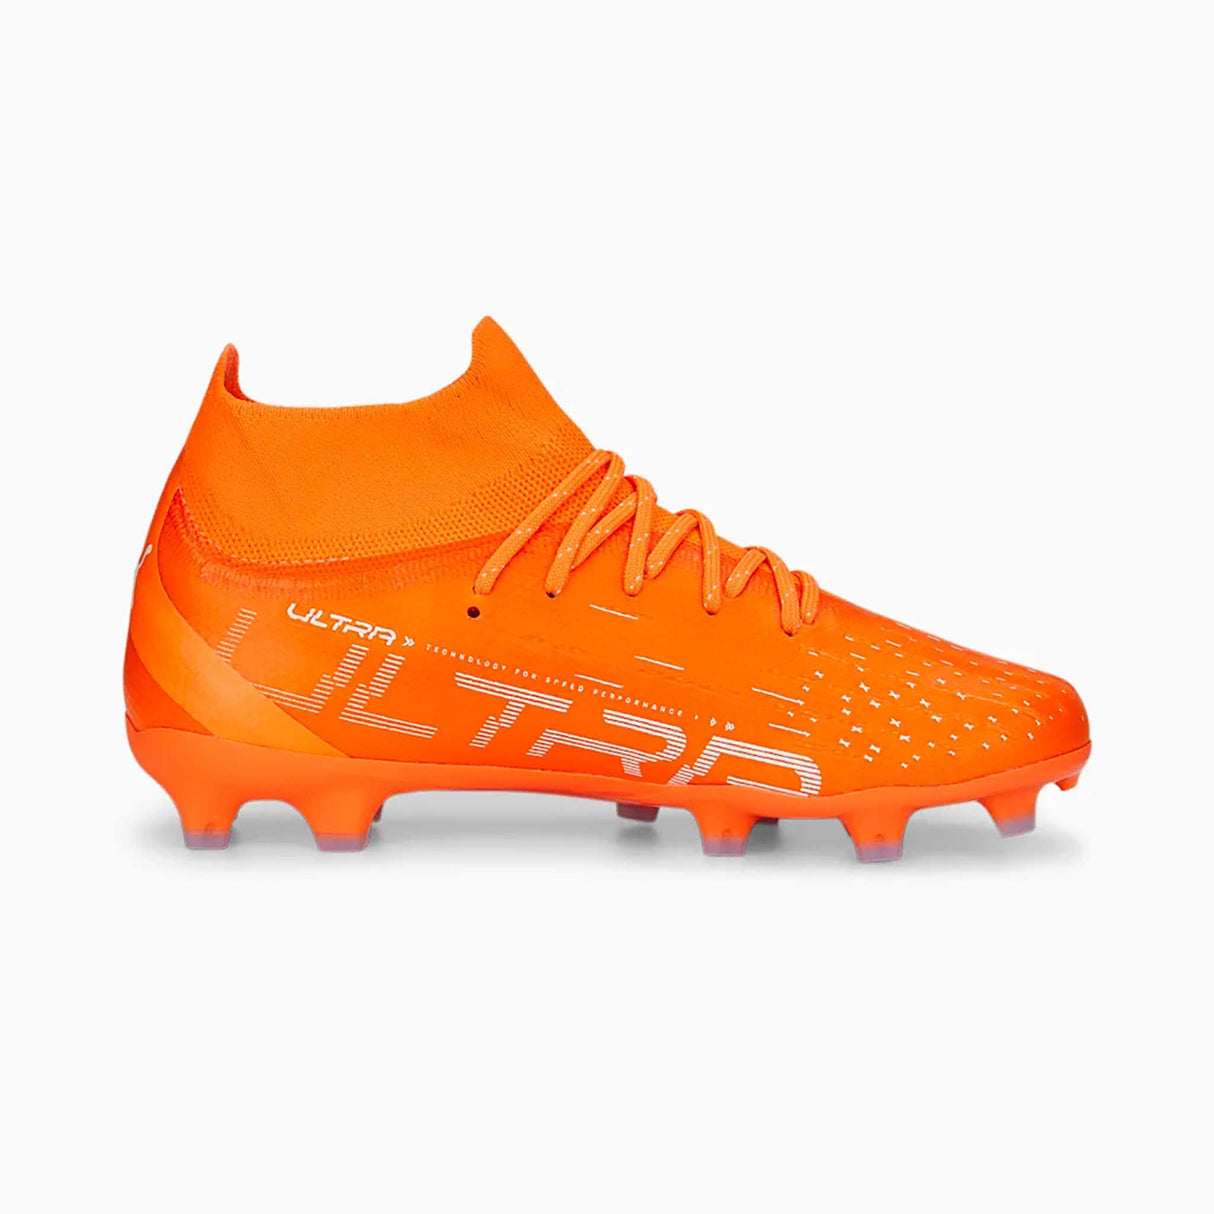 Puma Ultra Pro FG/AG souliers de soccer enfant lateral- orange / white / blue glimmer